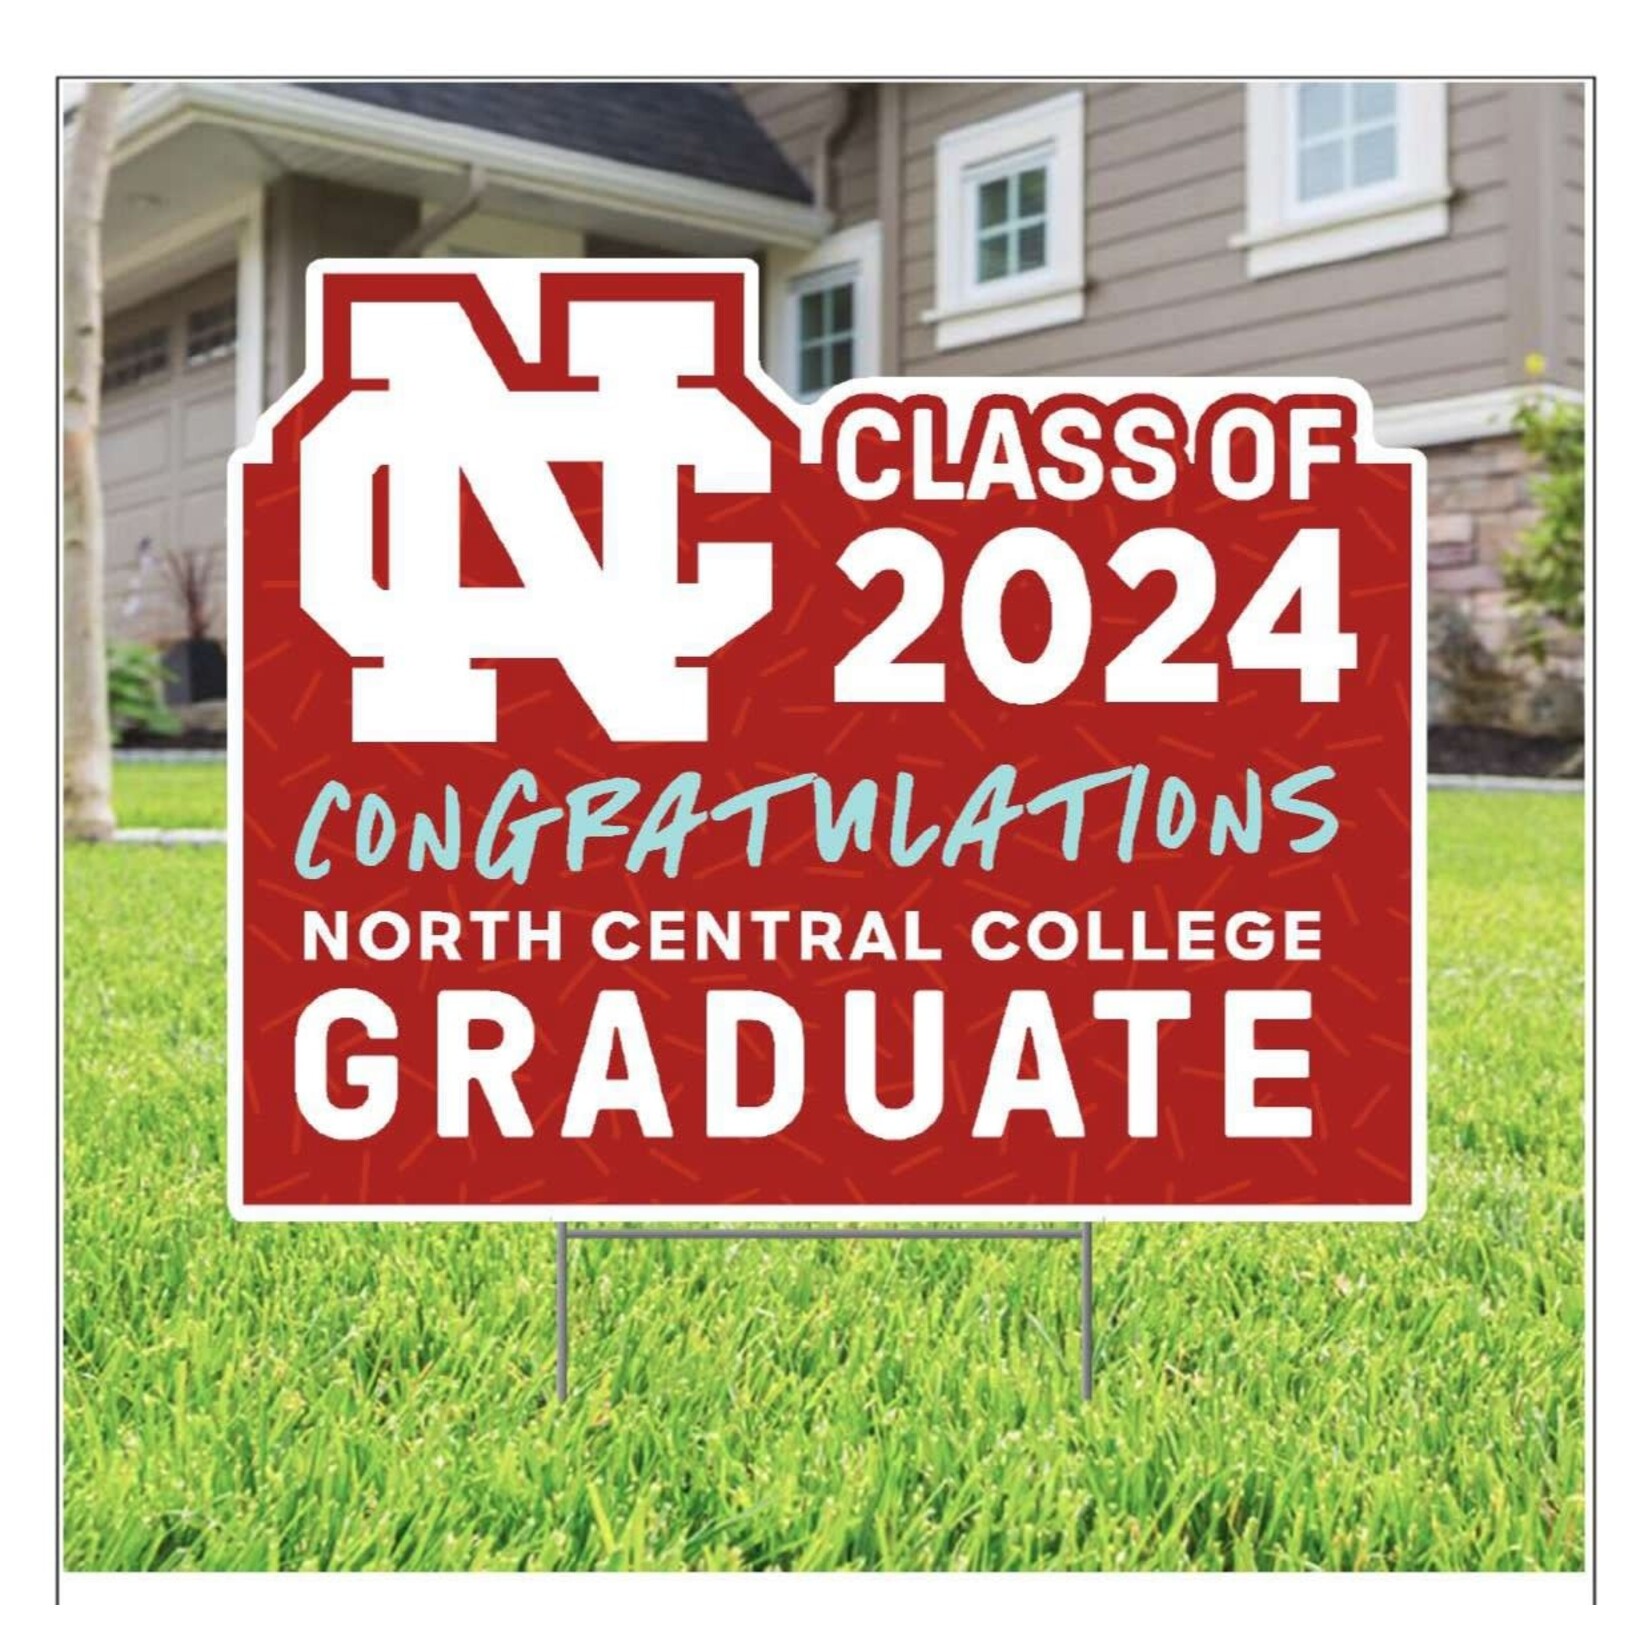 CDI Corporation Class of 2024 Graduation Lawn Yard sign